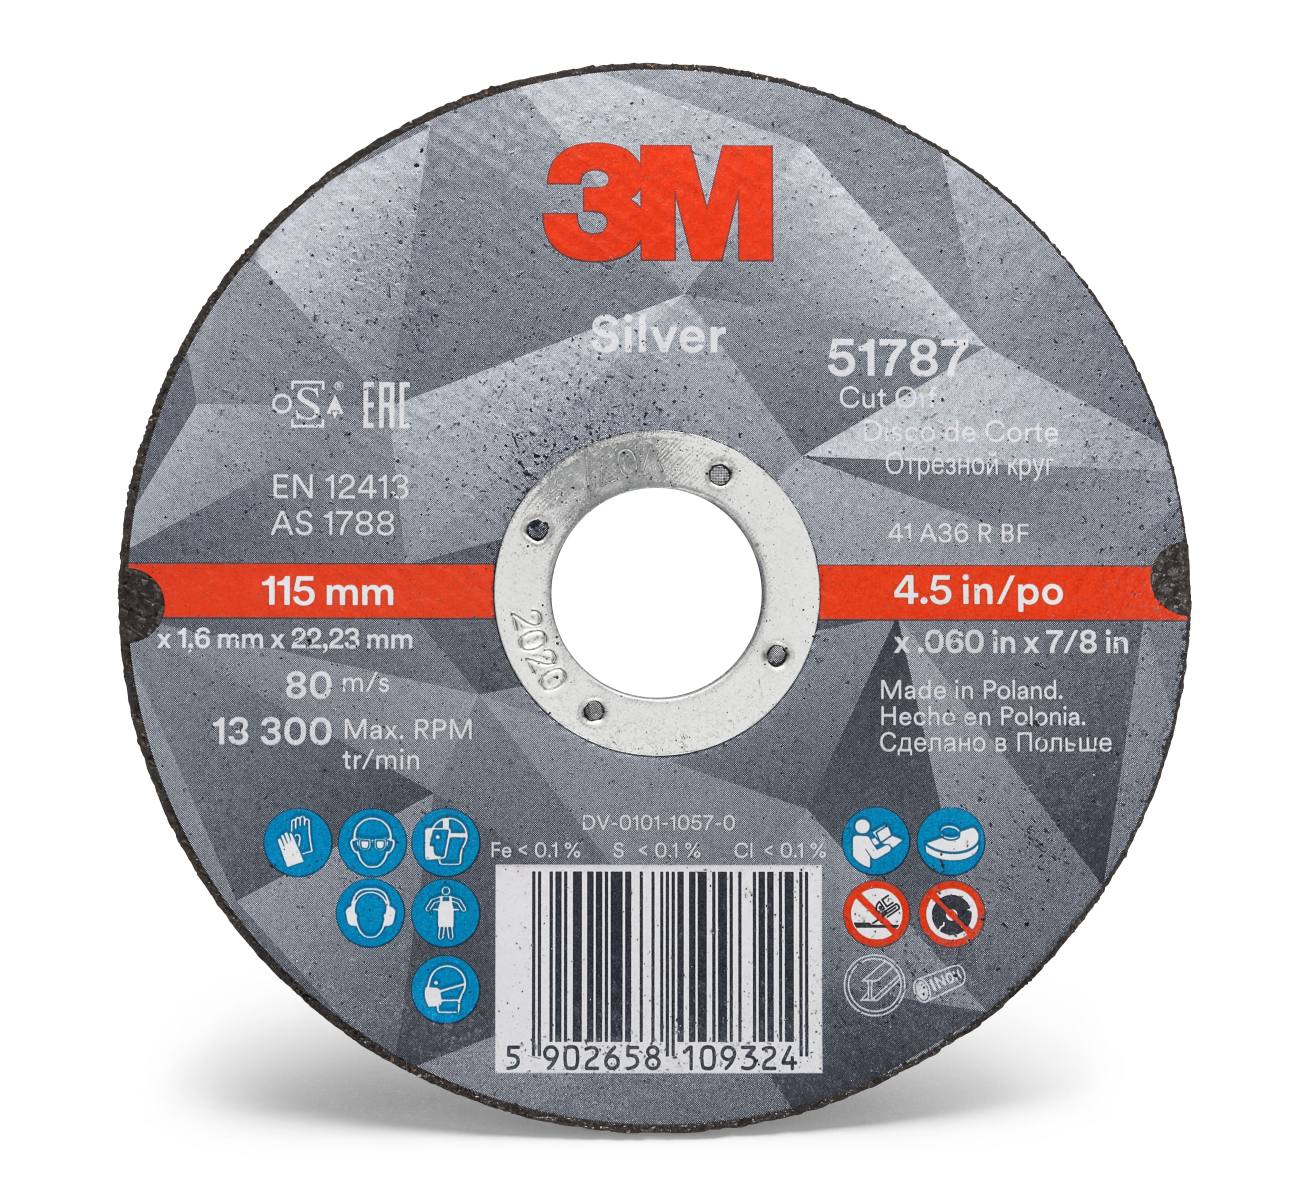 Disco da taglio 3M Silver Cut-Off, 100 mm, 1,0 mm, 16 mm, T41, 51775